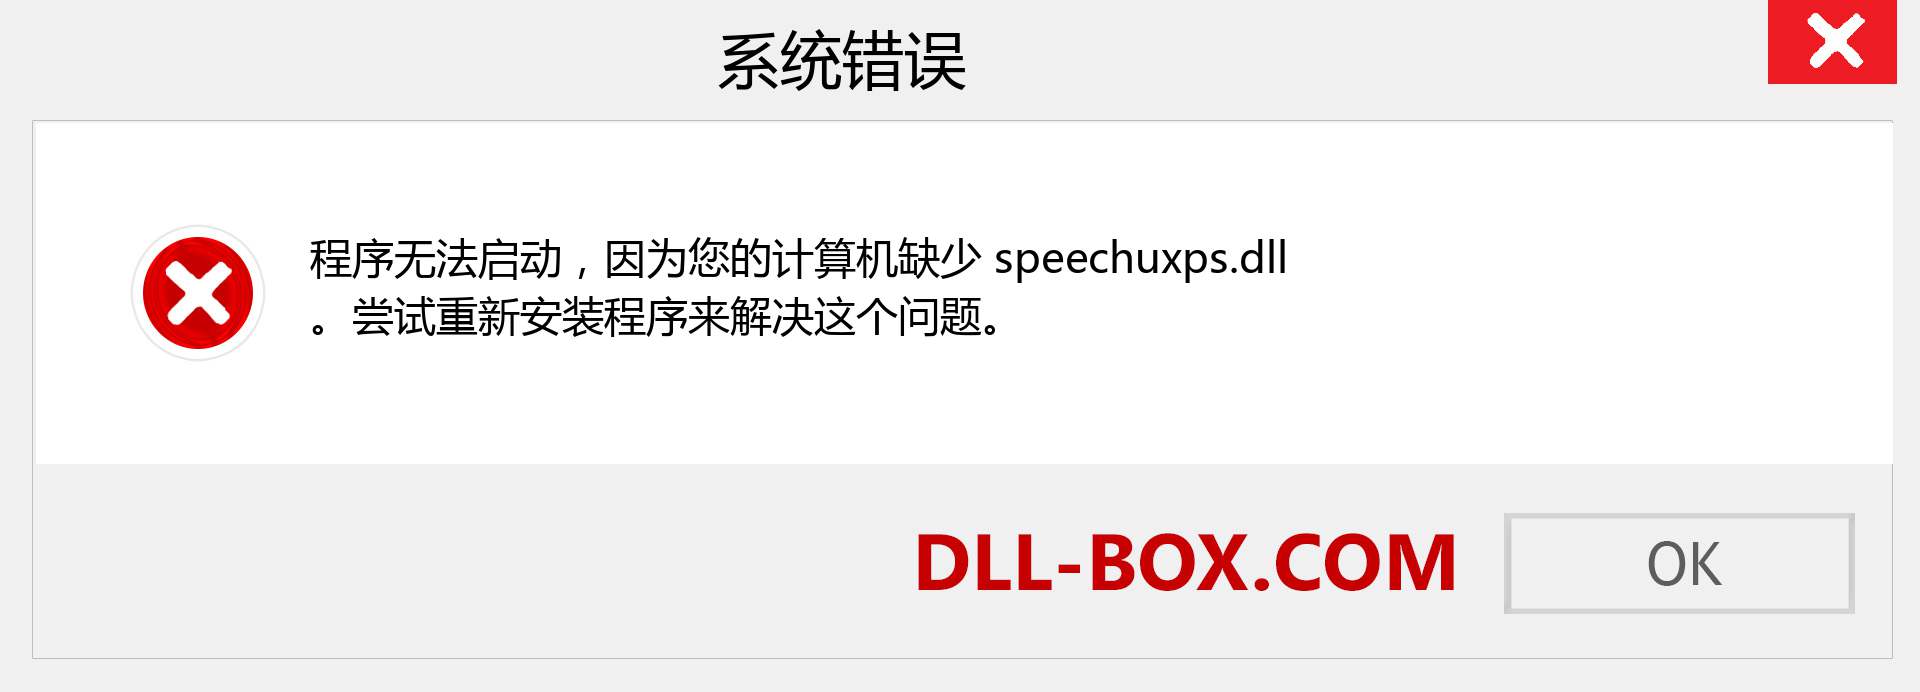 speechuxps.dll 文件丢失？。 适用于 Windows 7、8、10 的下载 - 修复 Windows、照片、图像上的 speechuxps dll 丢失错误